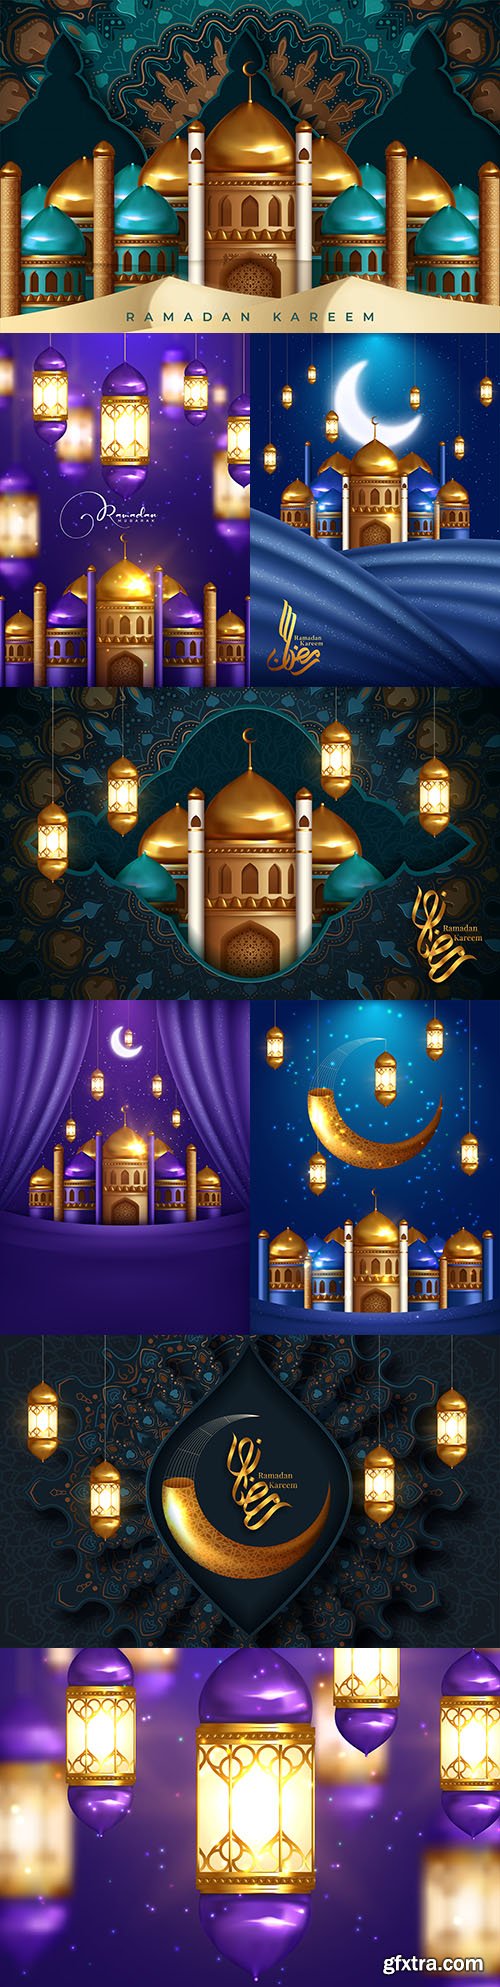 Ramadan Kareem greeting mosque and painted calligraphic illustration
